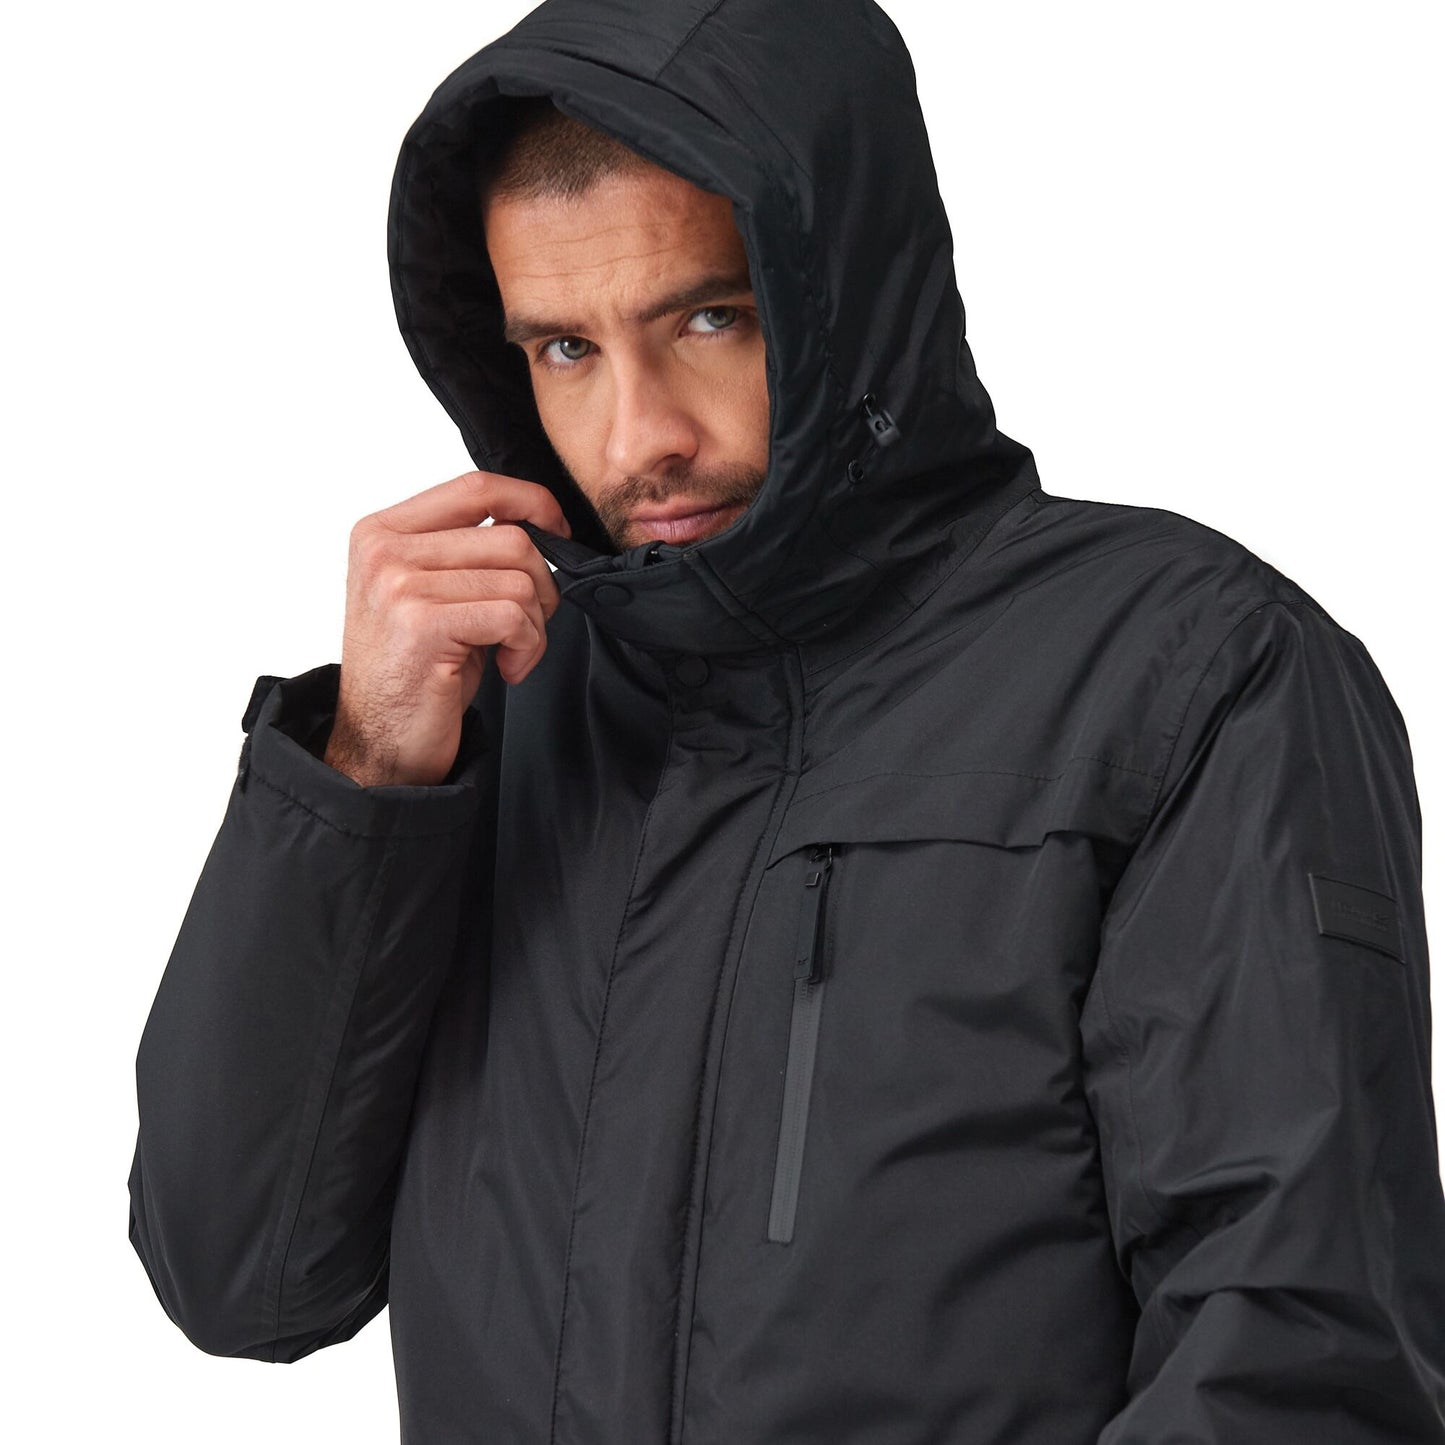 Regatta Men's Penbreck Waterproof Jacket - Black